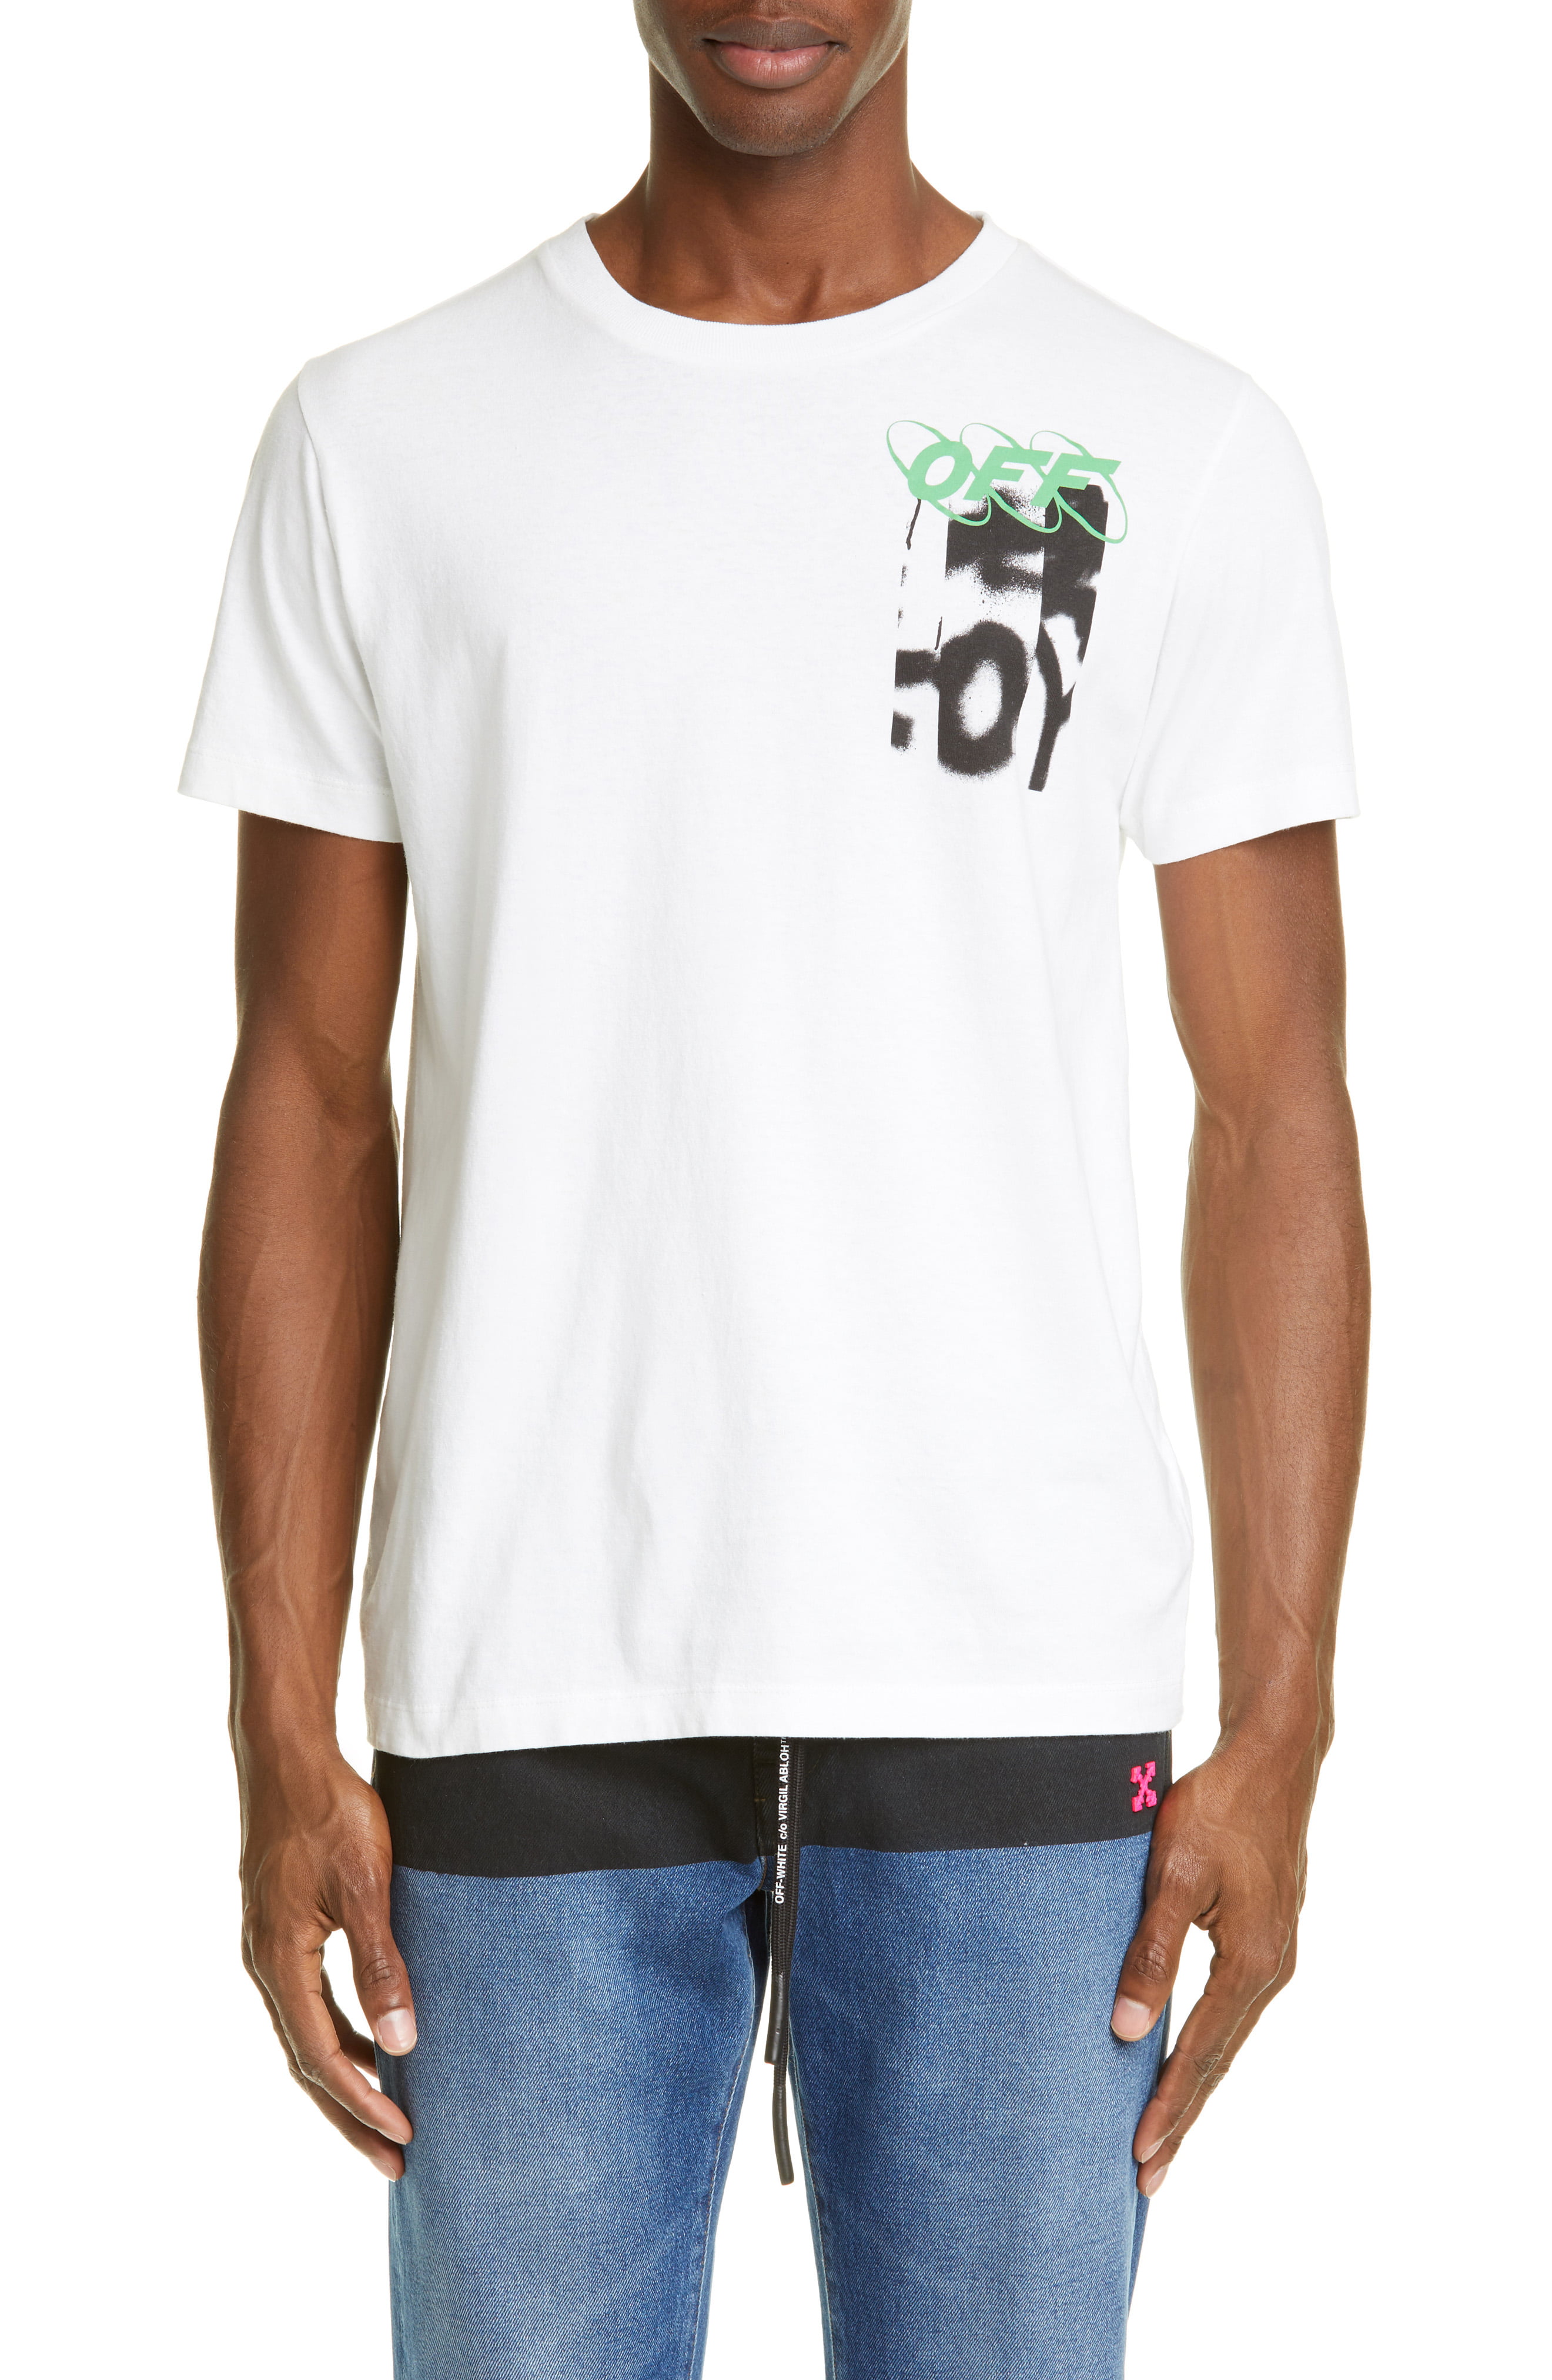 Off-White Slim Fit Spray Blurred Graphic T-Shirt